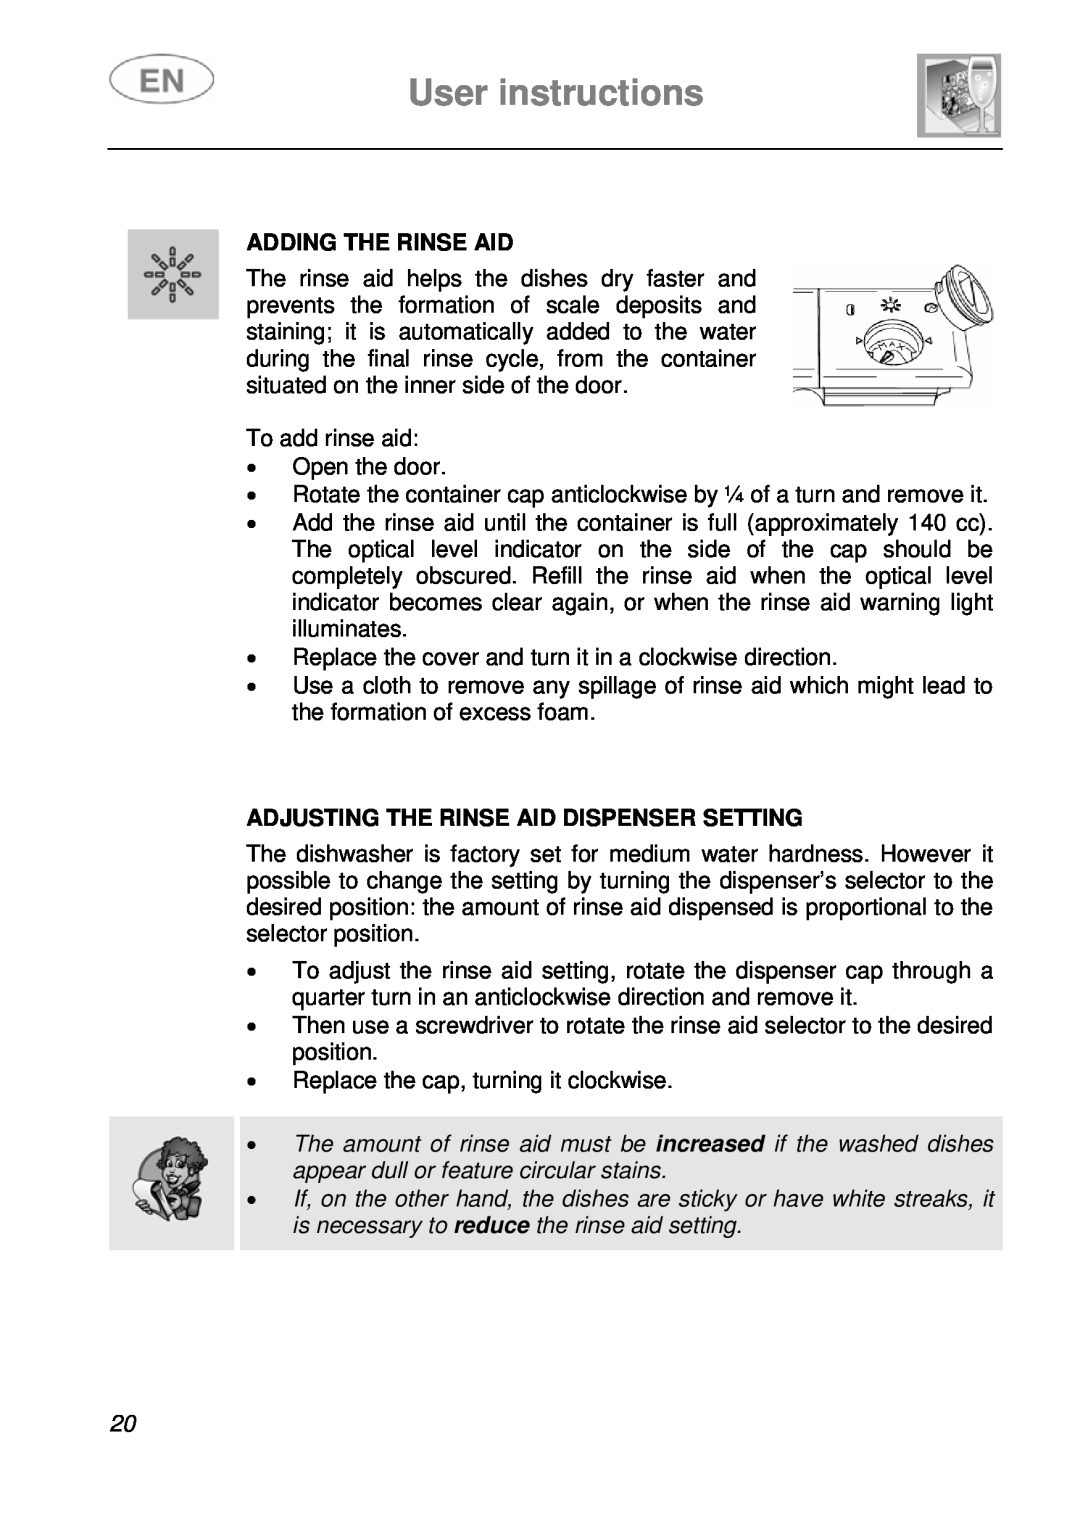 Smeg EN instruction manual Adding The Rinse Aid, Adjusting The Rinse Aid Dispenser Setting, User instructions 